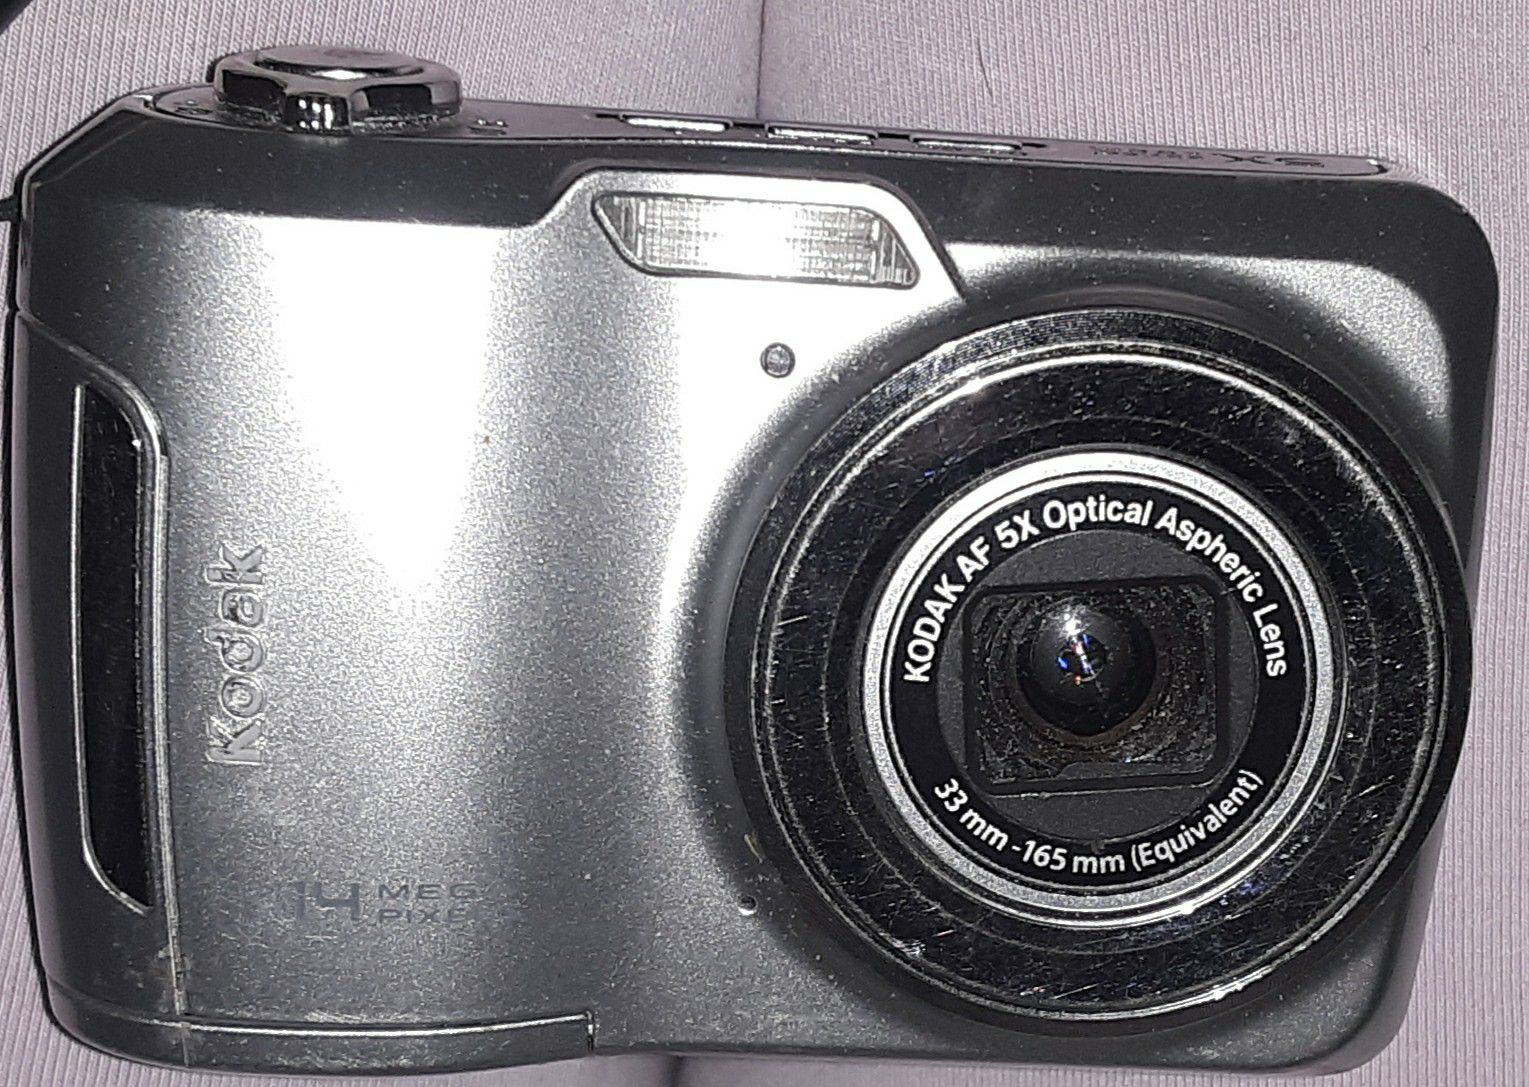 Kodak easyshare digital camera